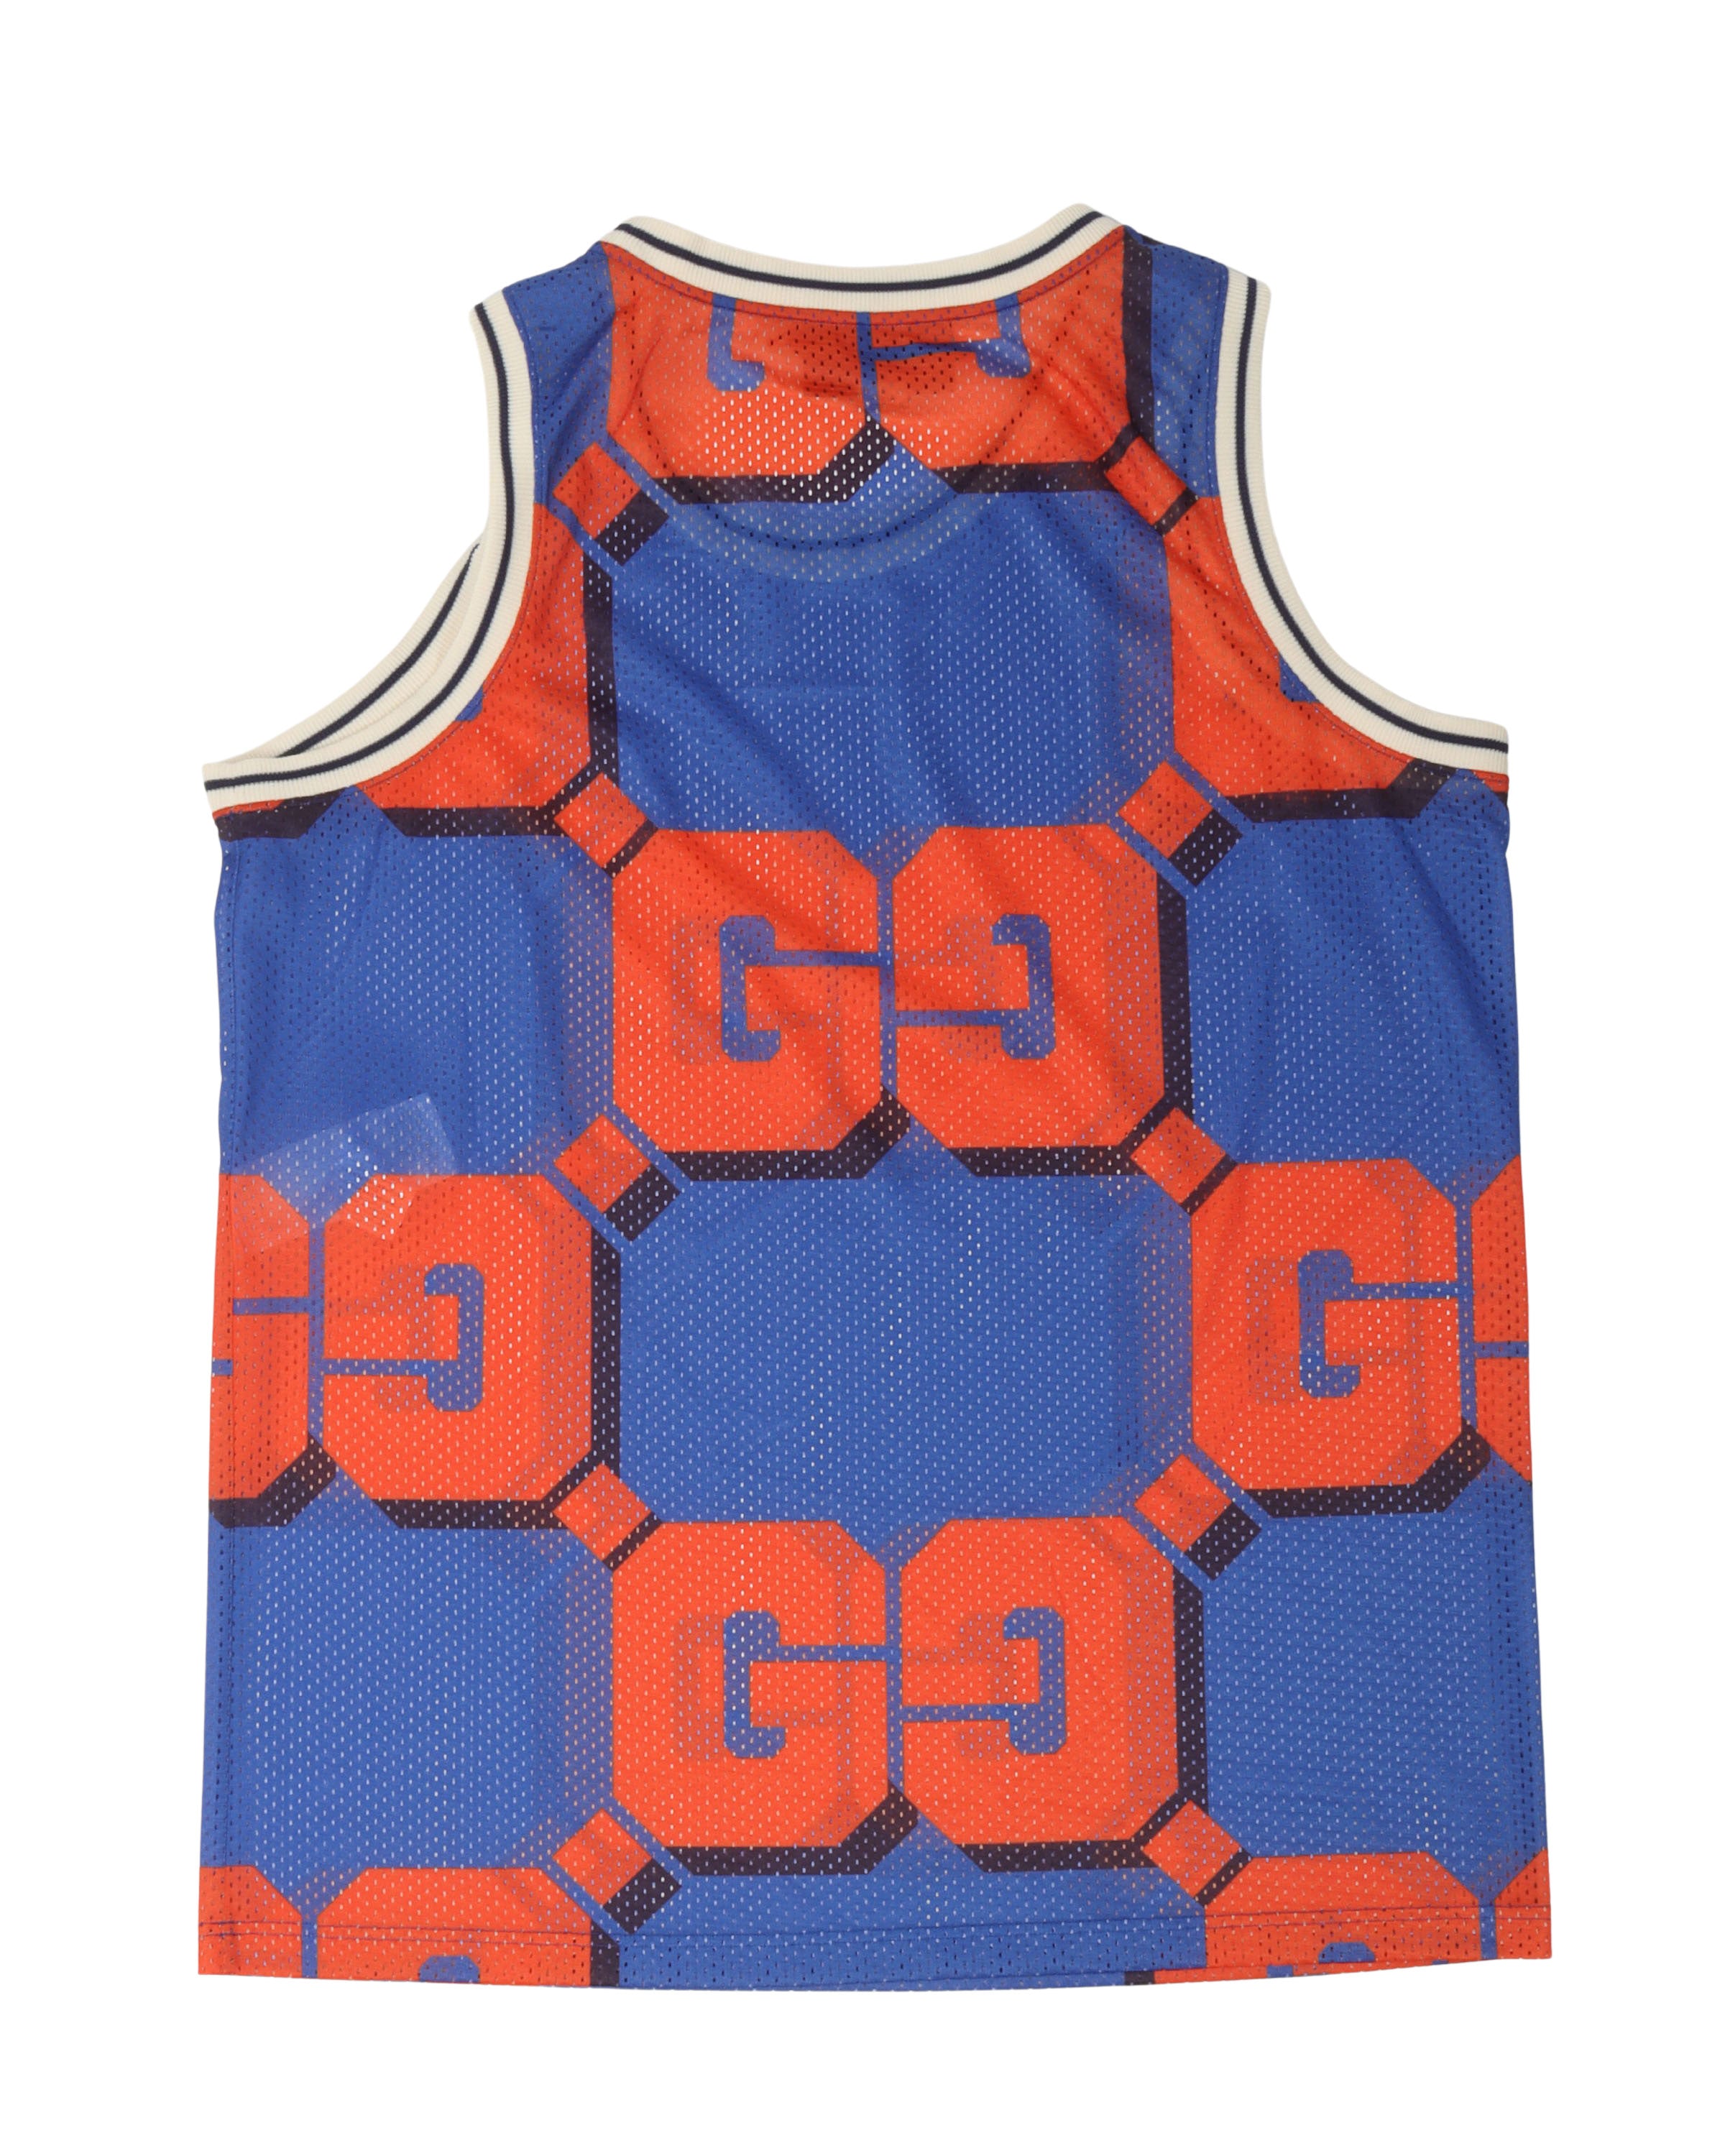 GG Basketball Jersey